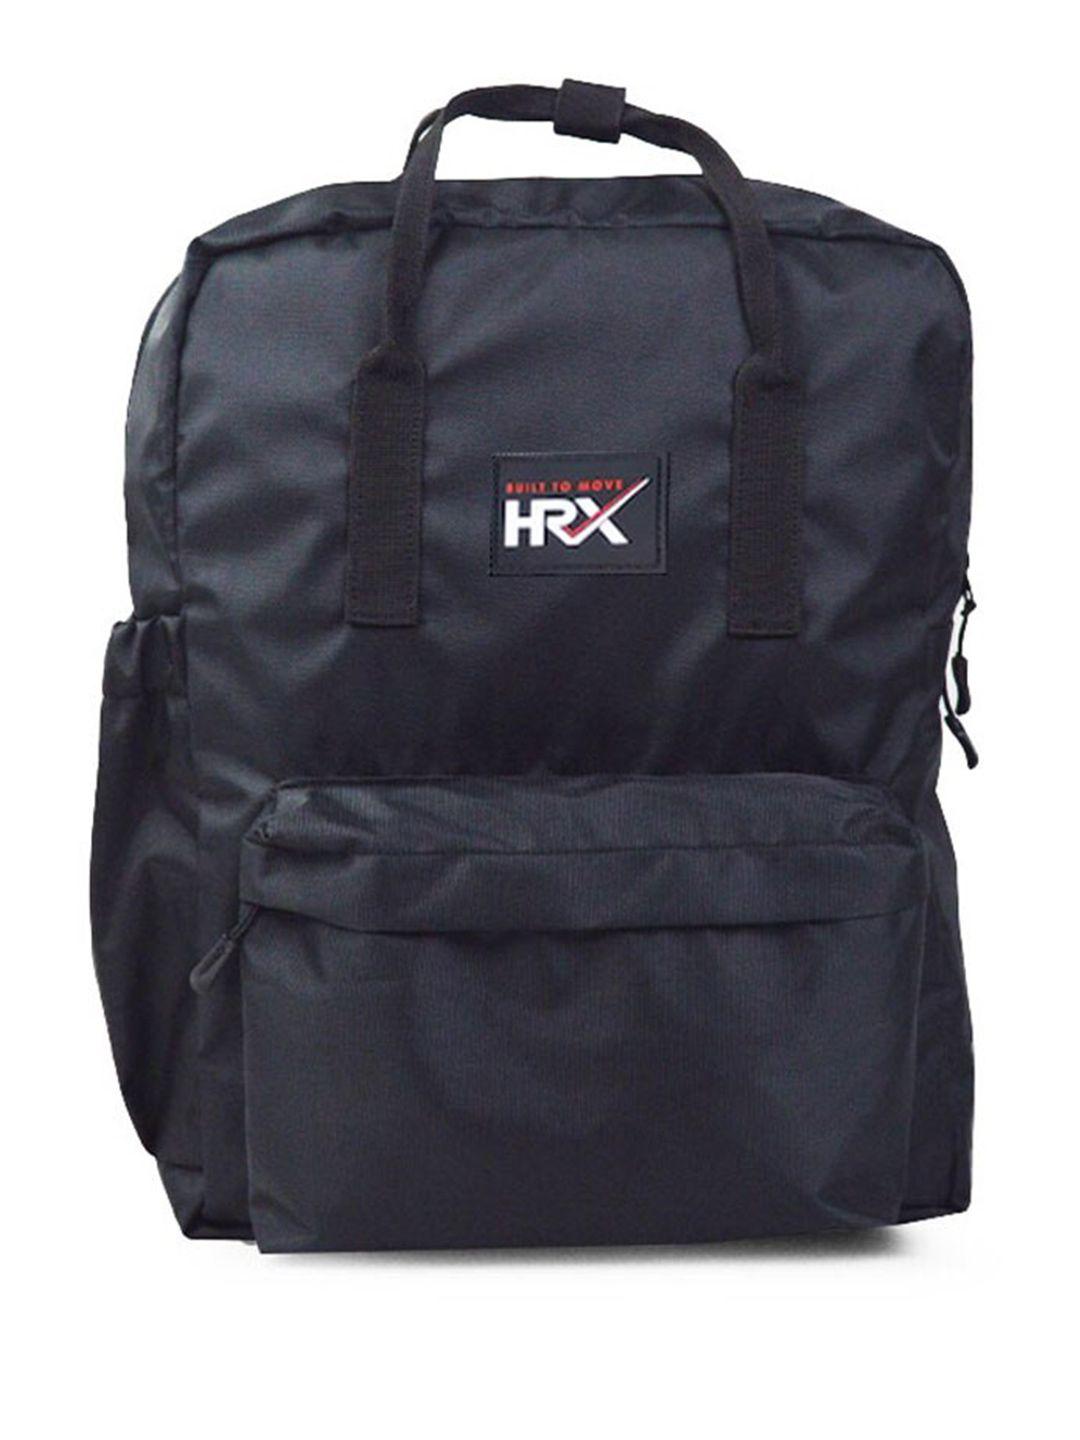 hrx by hrithik roshan unisex 15 inch laptop backpack